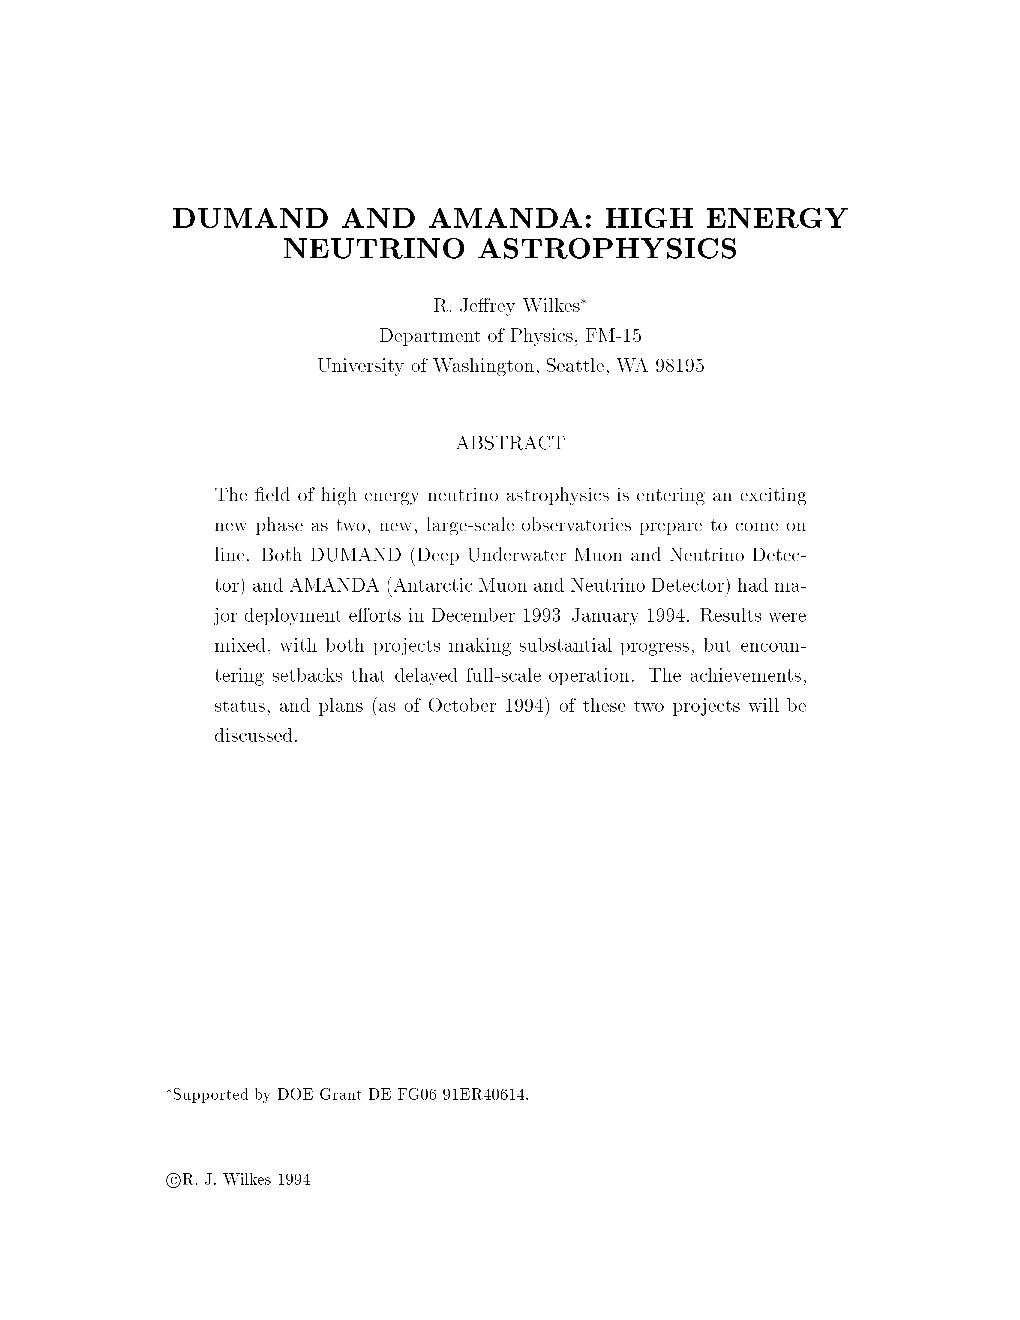 Dumand and Amanda: High Energy Neutrino